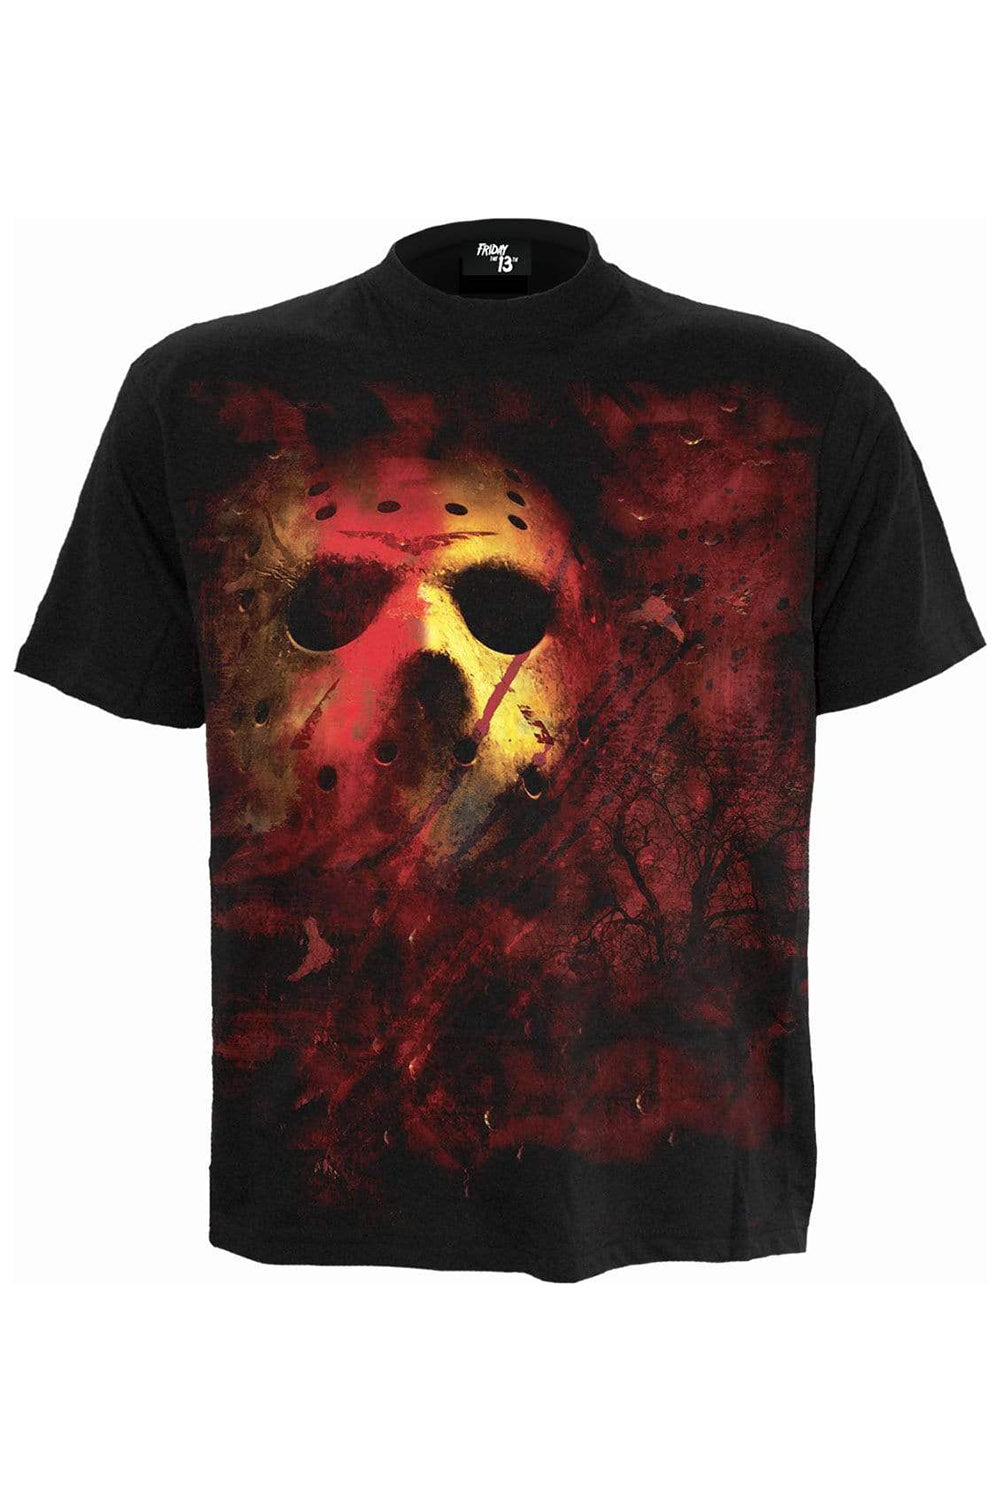 Jason Lives: Friday the 13th T-Shirt